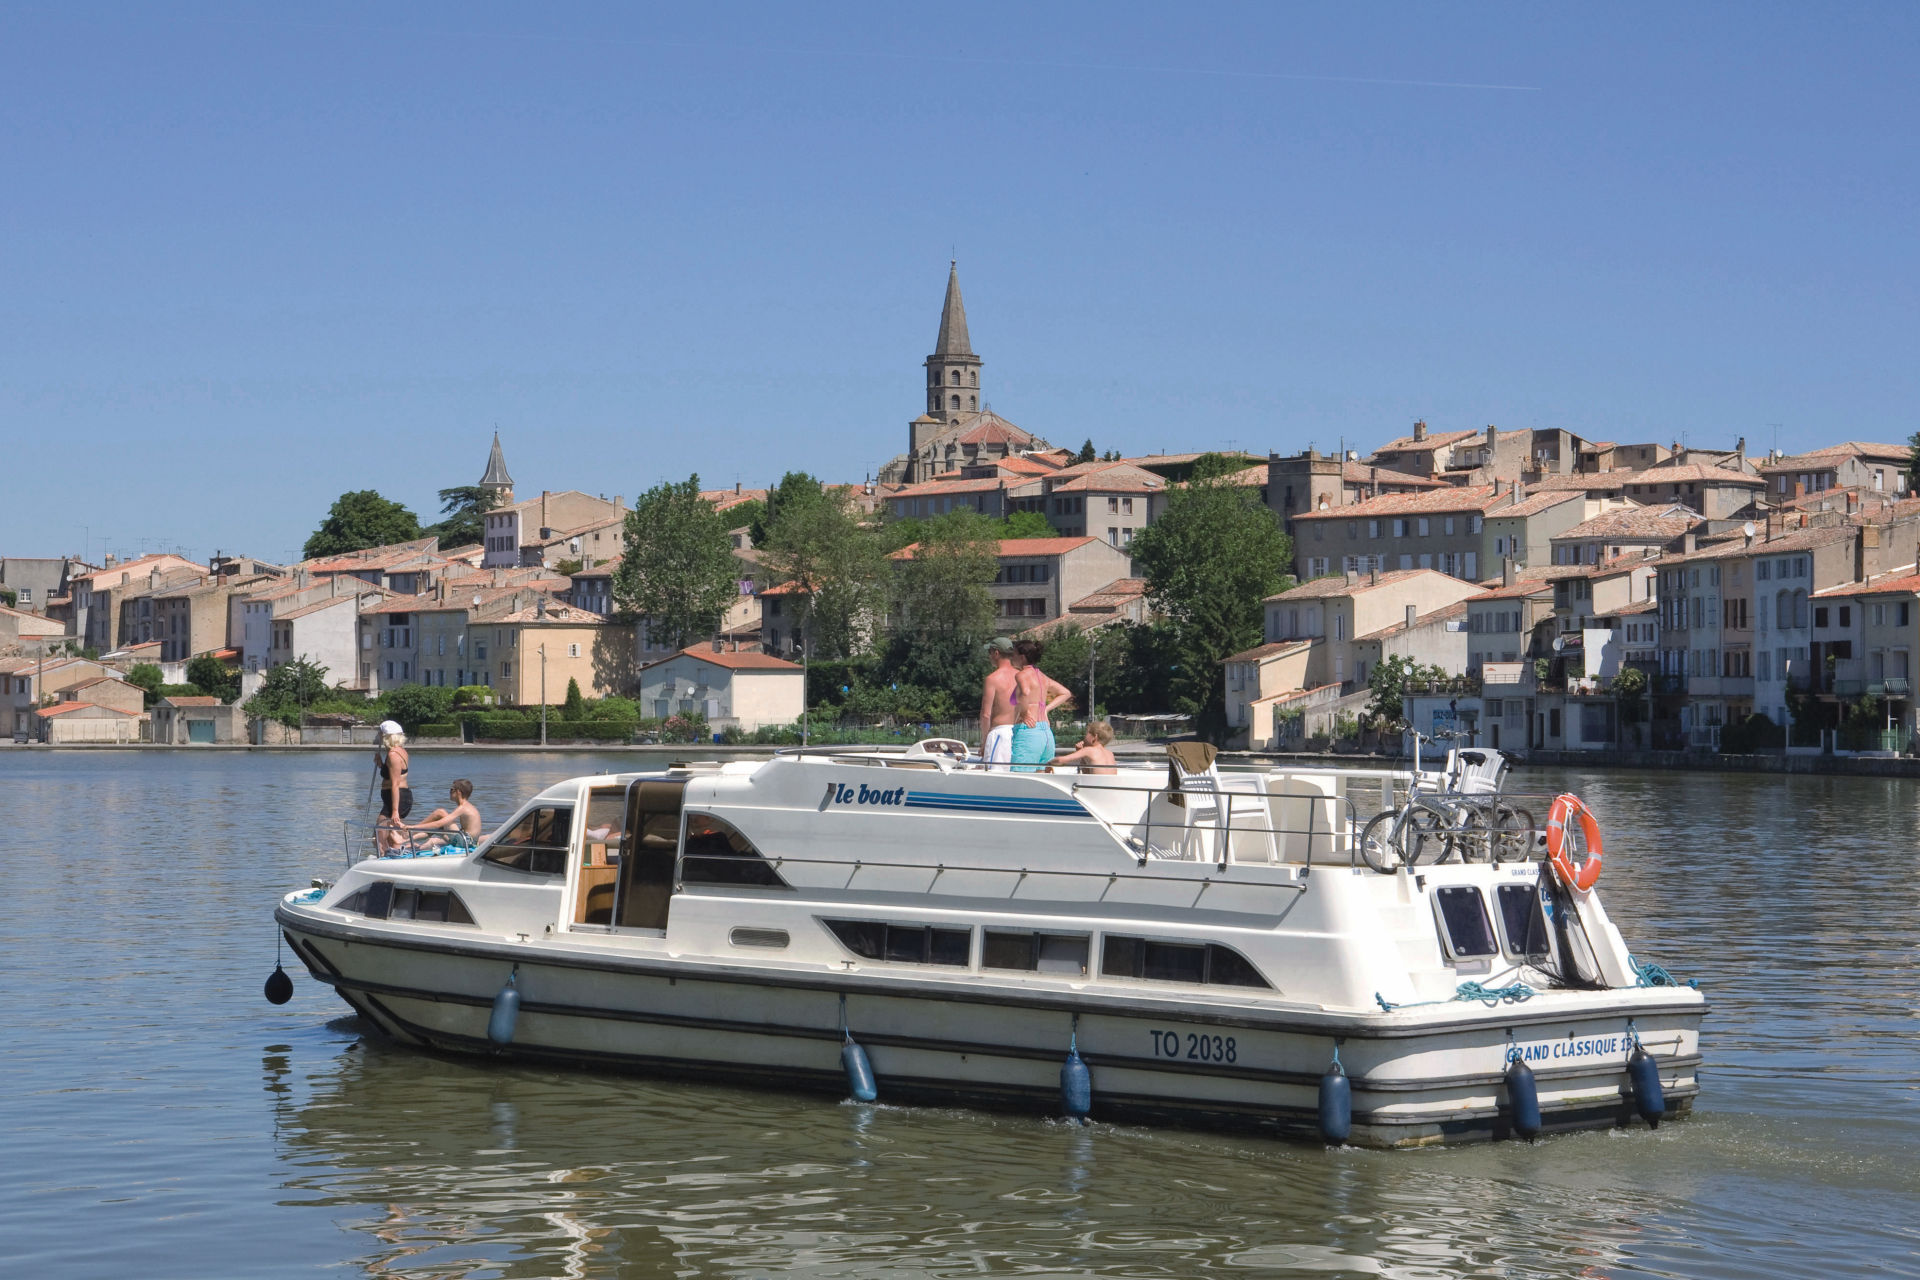 360 VR Virtual Tours of the Grand Classique | Le Boat